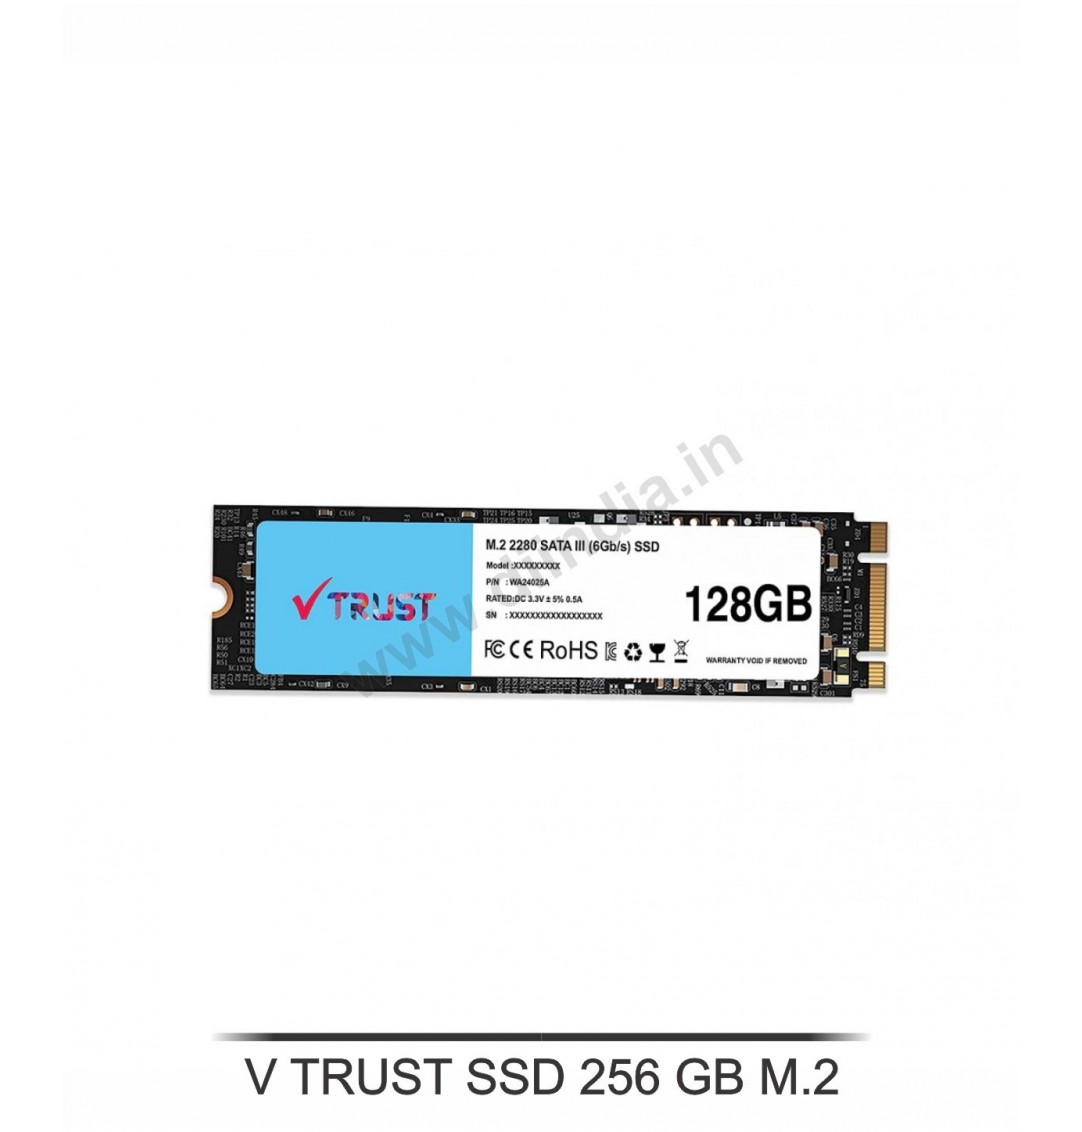 V TRUST SSD 256GB M.2 ( INCLUDING GST )